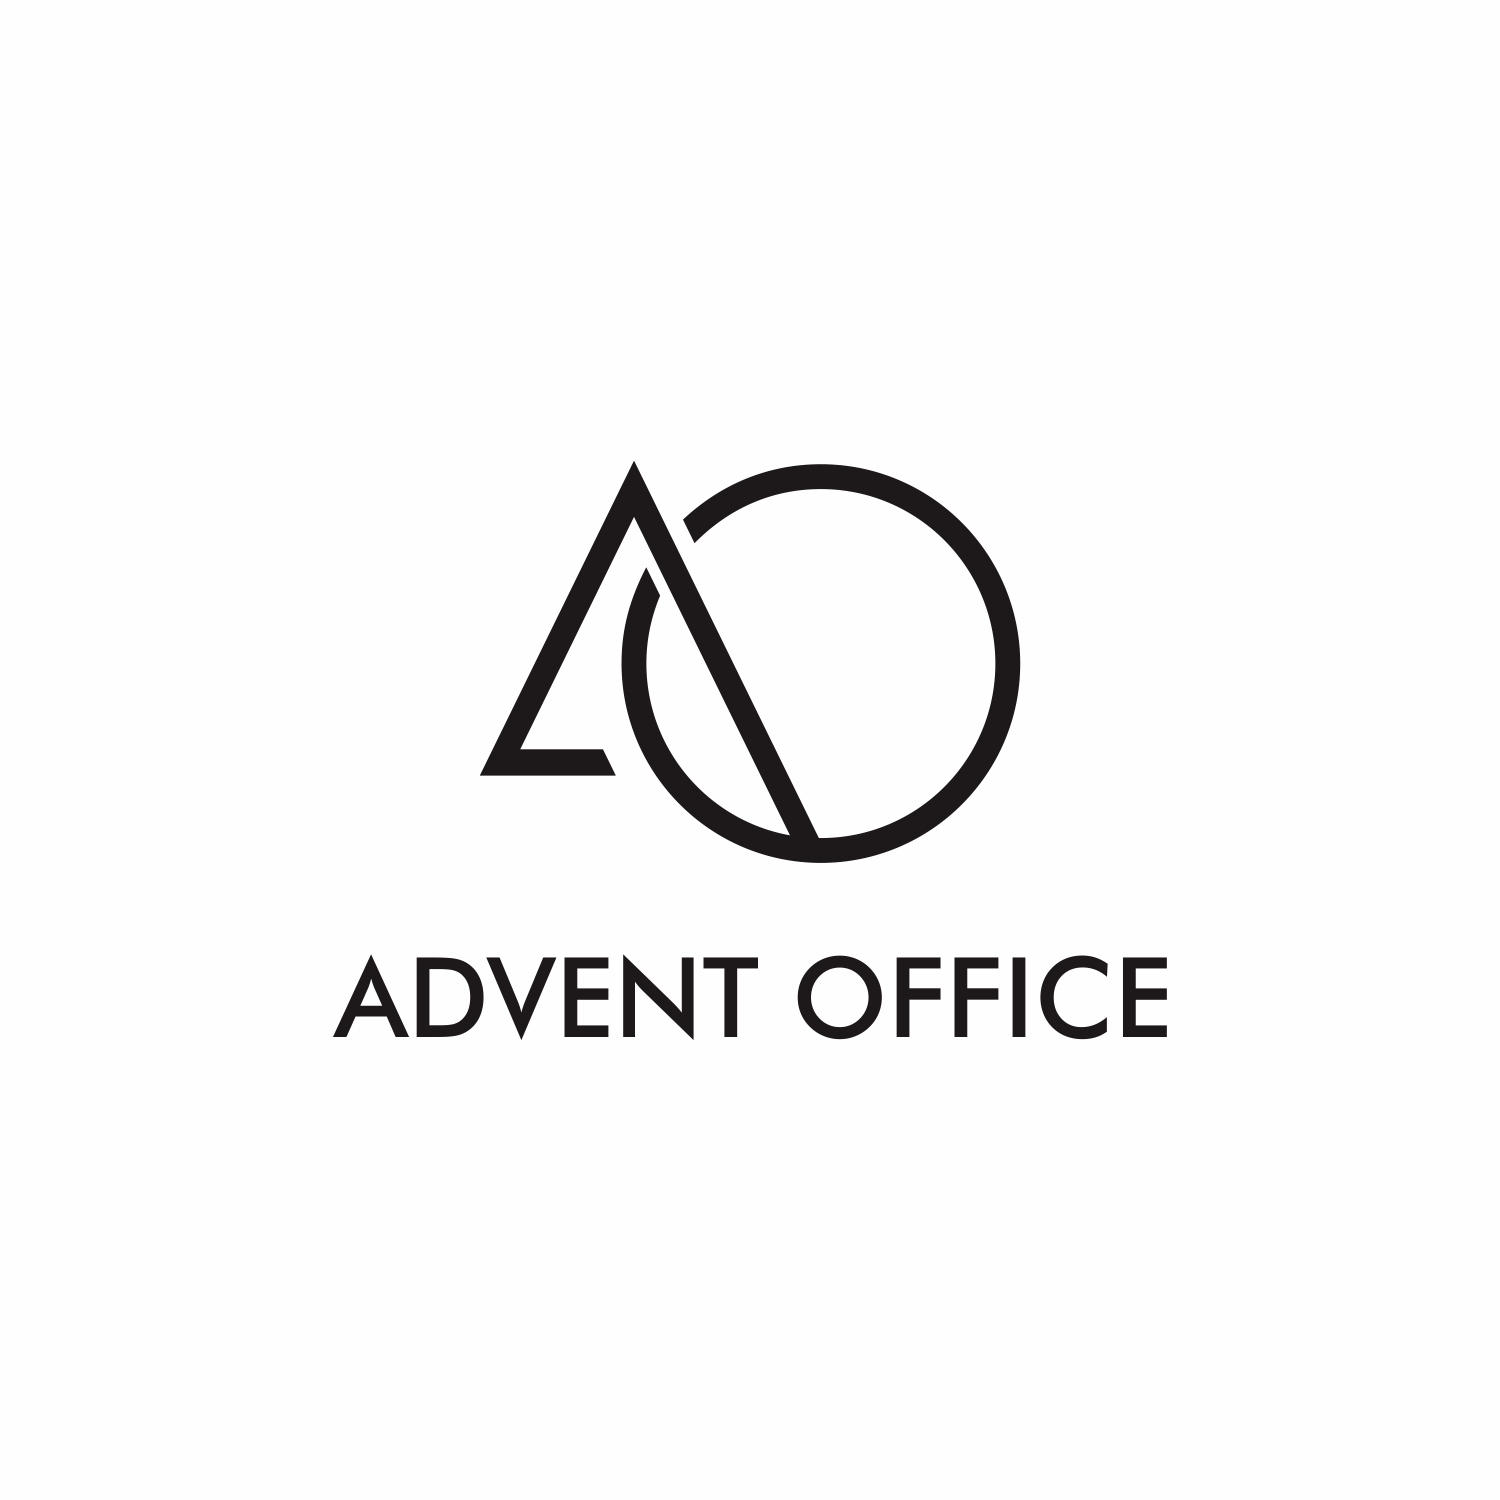 Ao Logo - Modern, Professional, It Company Logo Design for A.O. ADVENT OFFICE